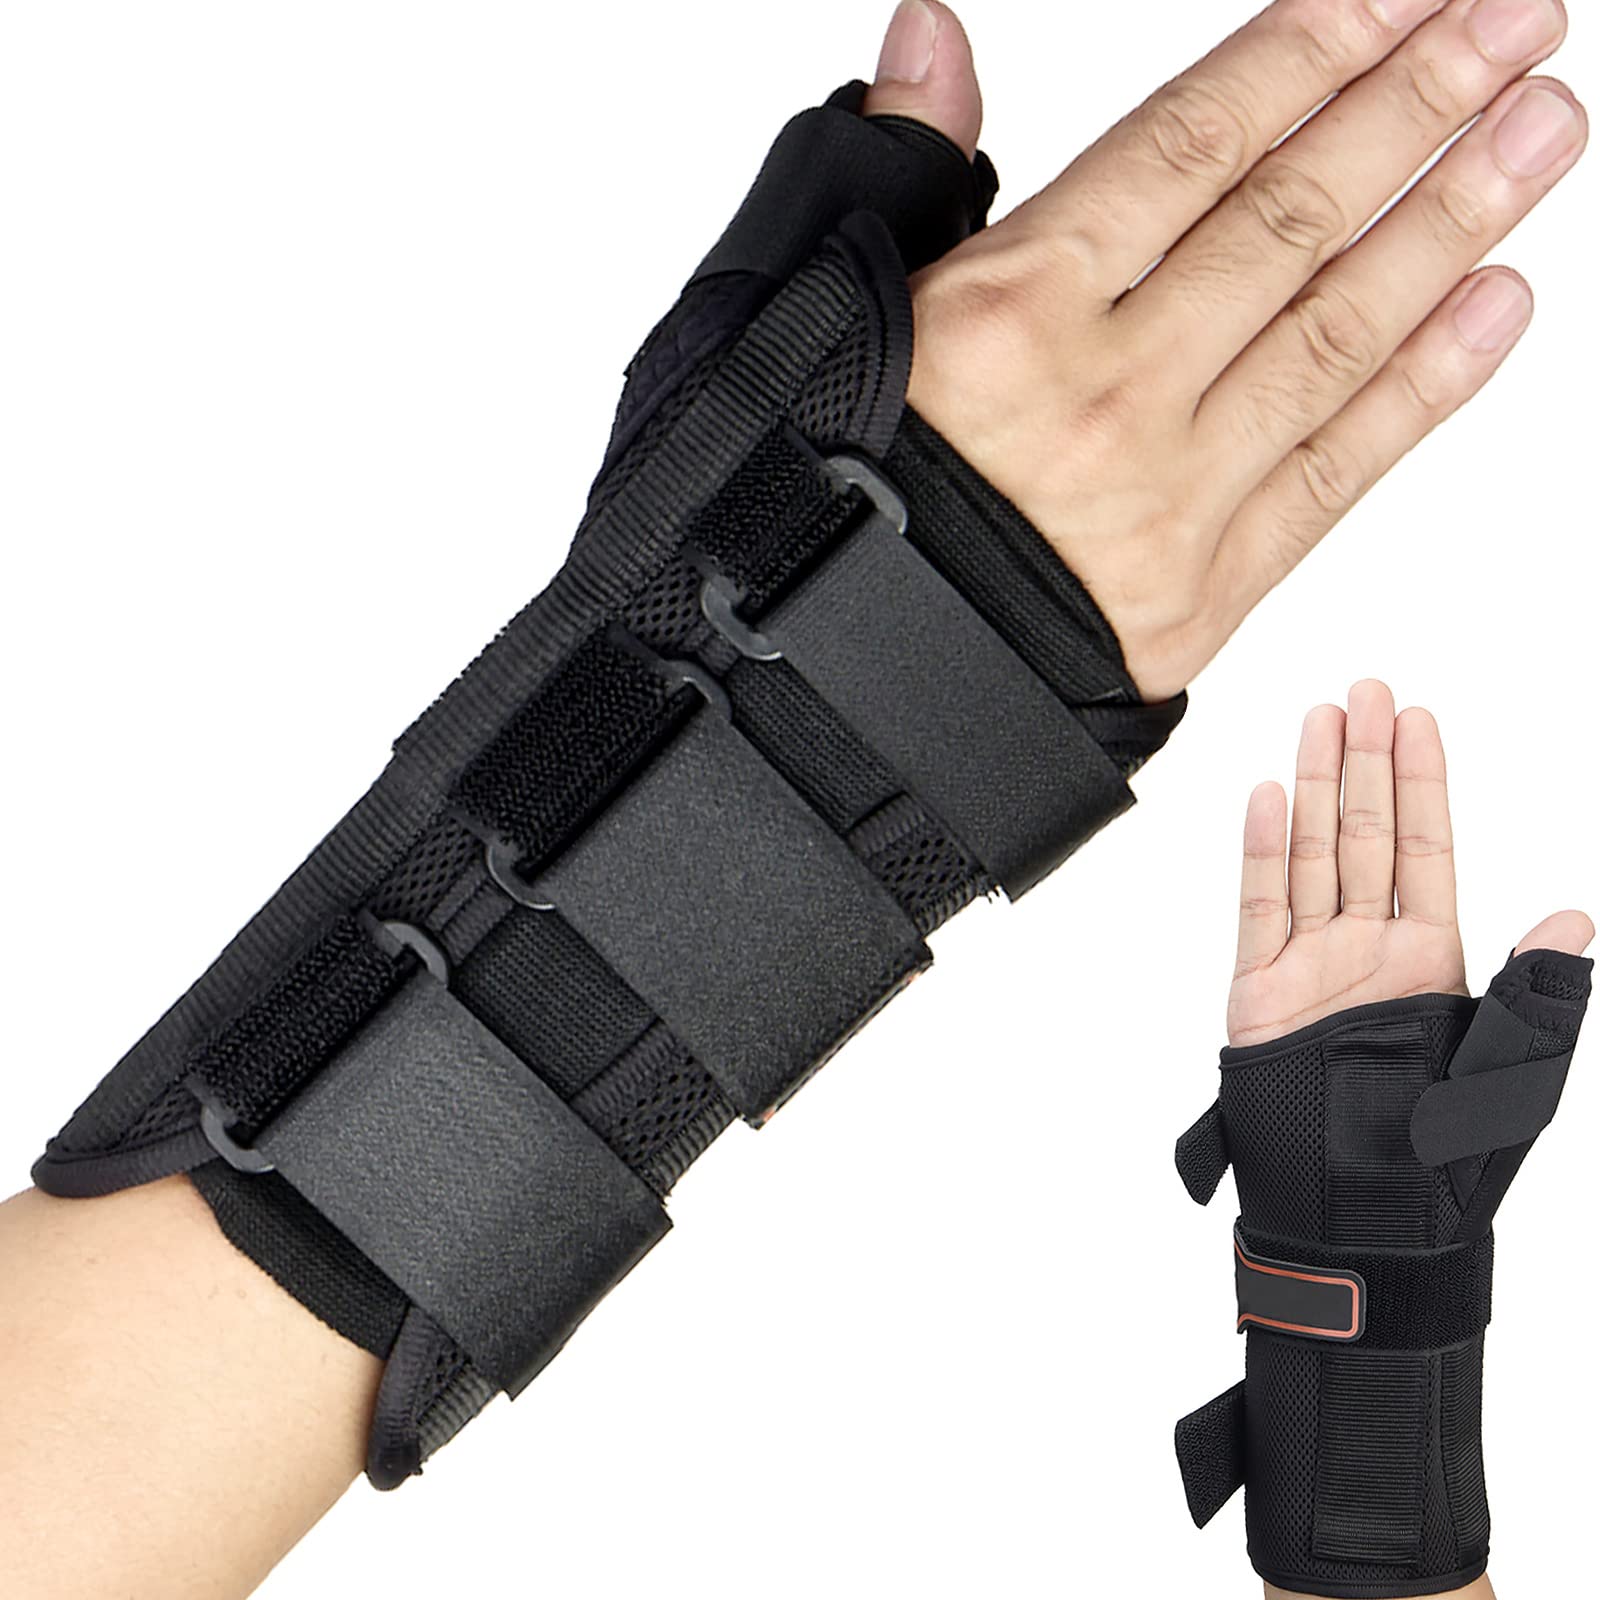 Wrist Brace Thumb Spica Splint For De Quervains Tenosynovitis Tendonitis Carpal Tunnel Arthritis